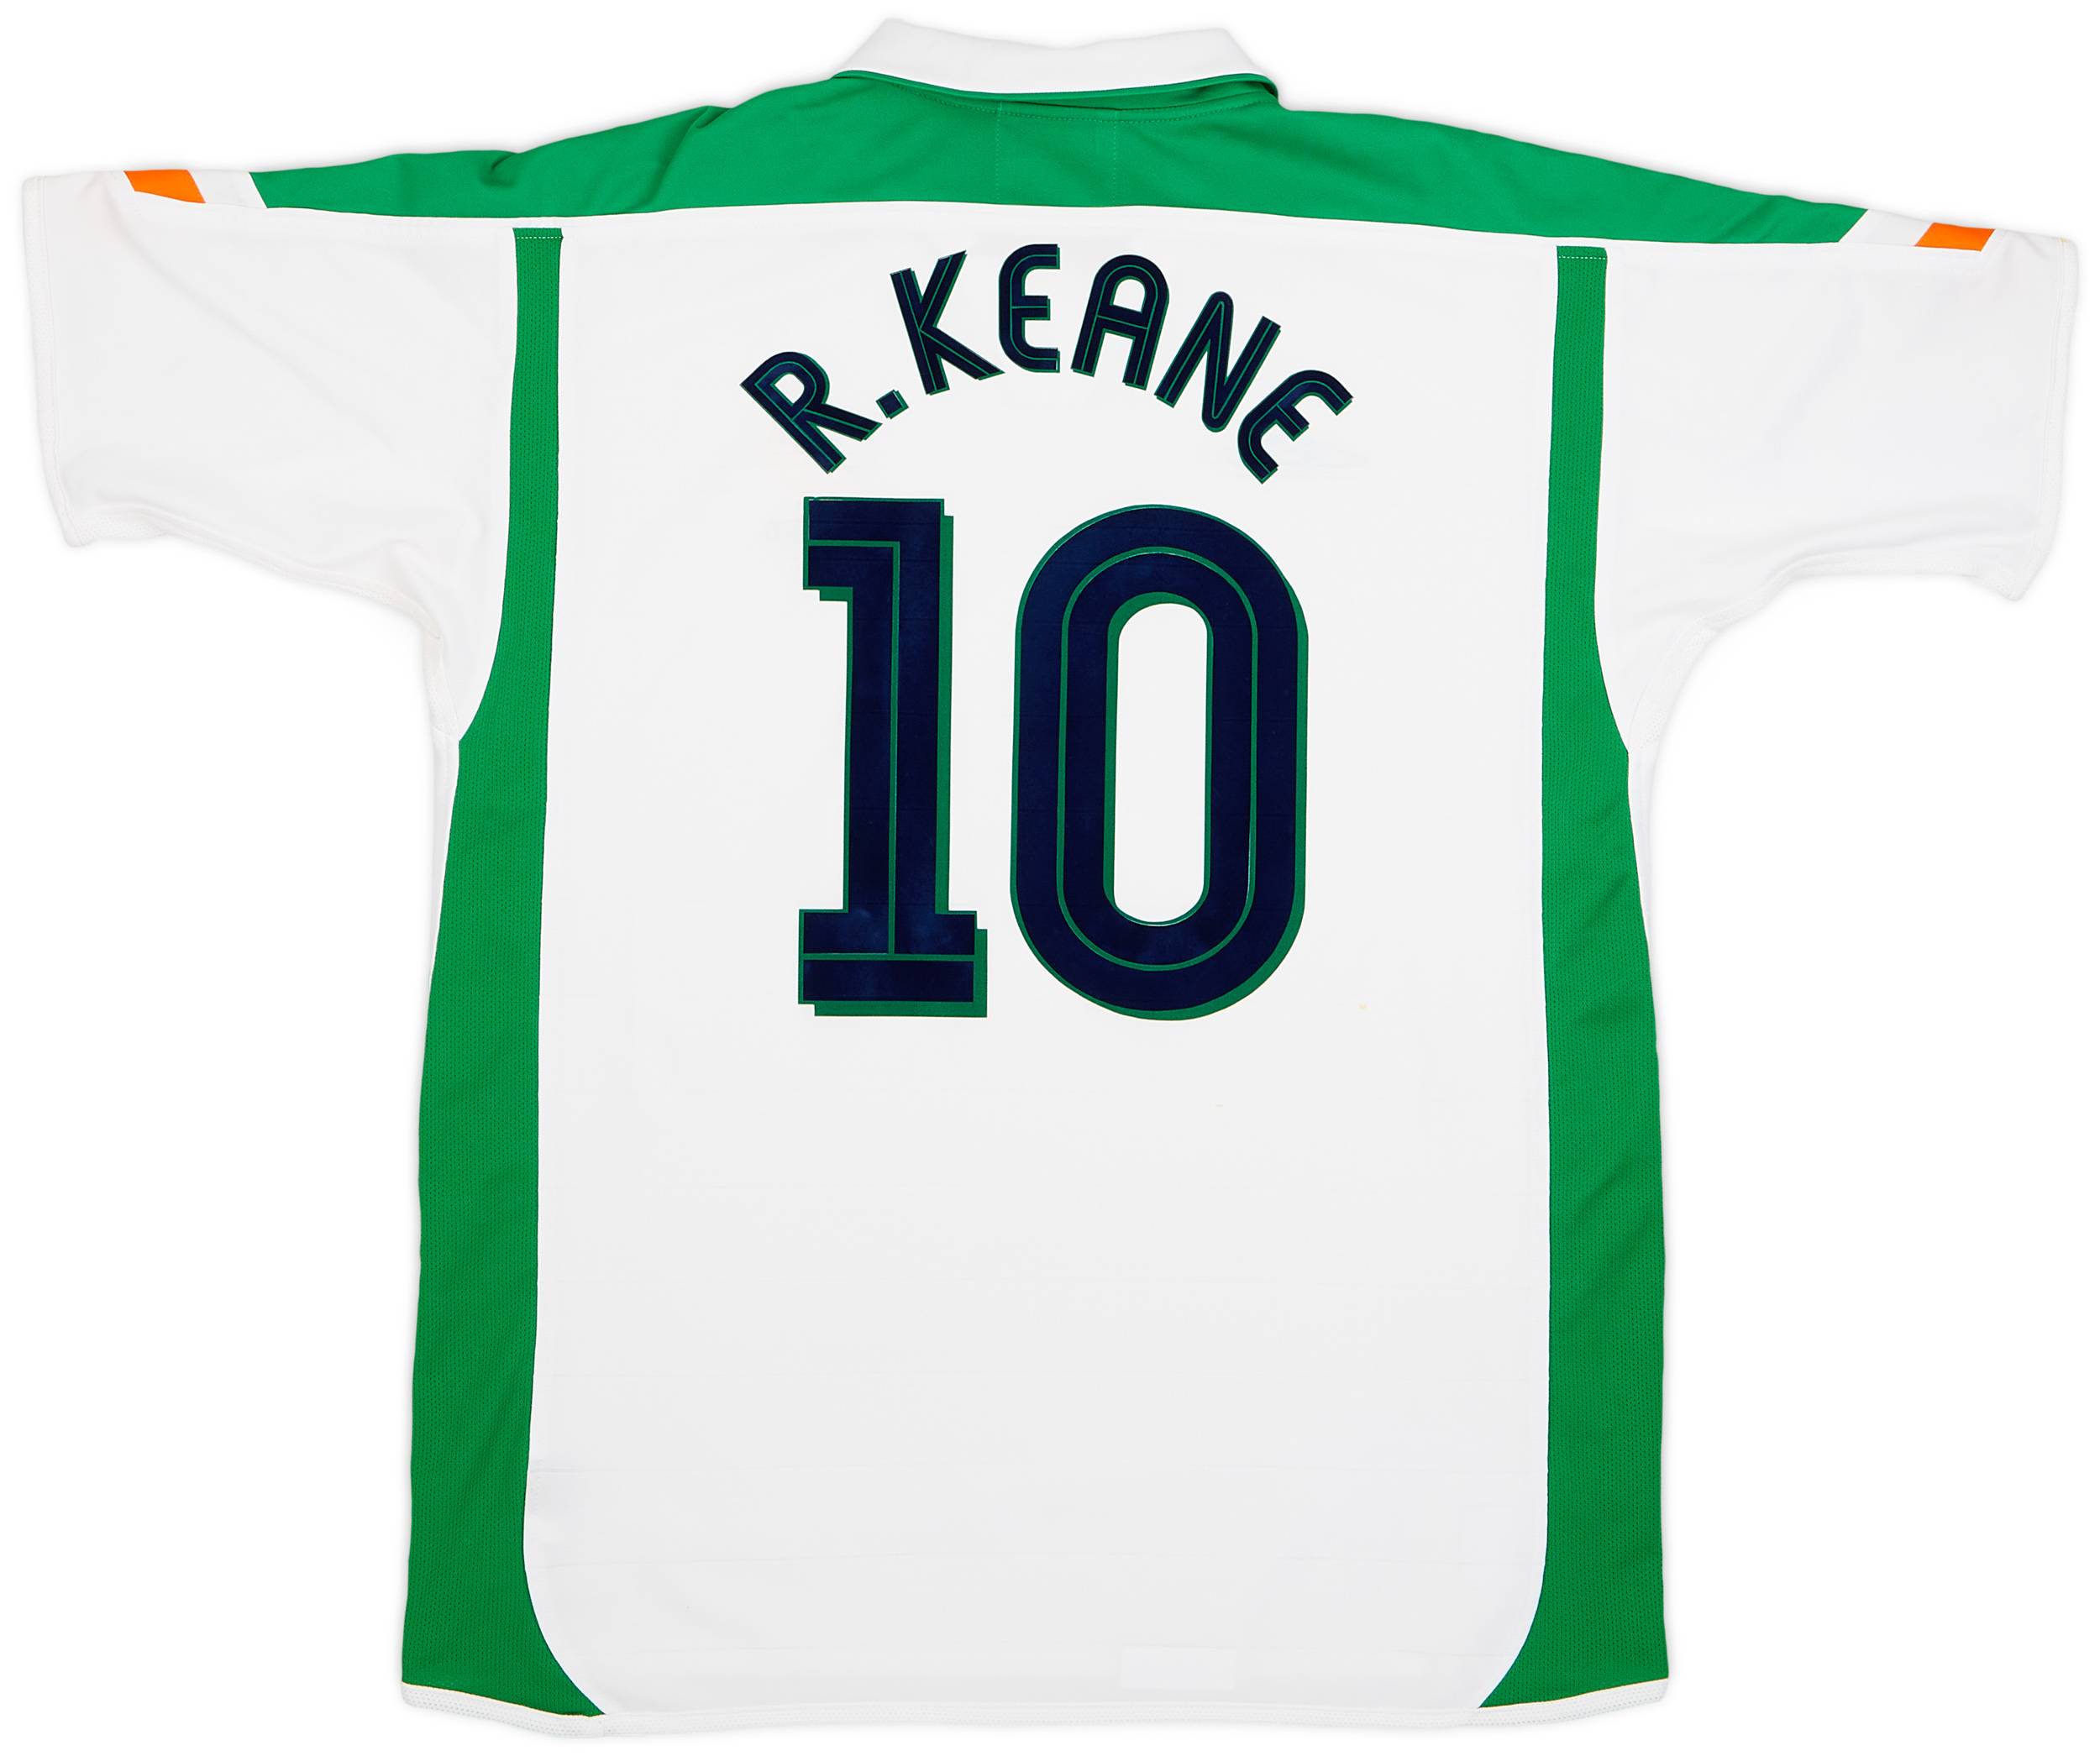 2003-05 Ireland Away Shirt R.Keane #10 - 8/10 - (XL)